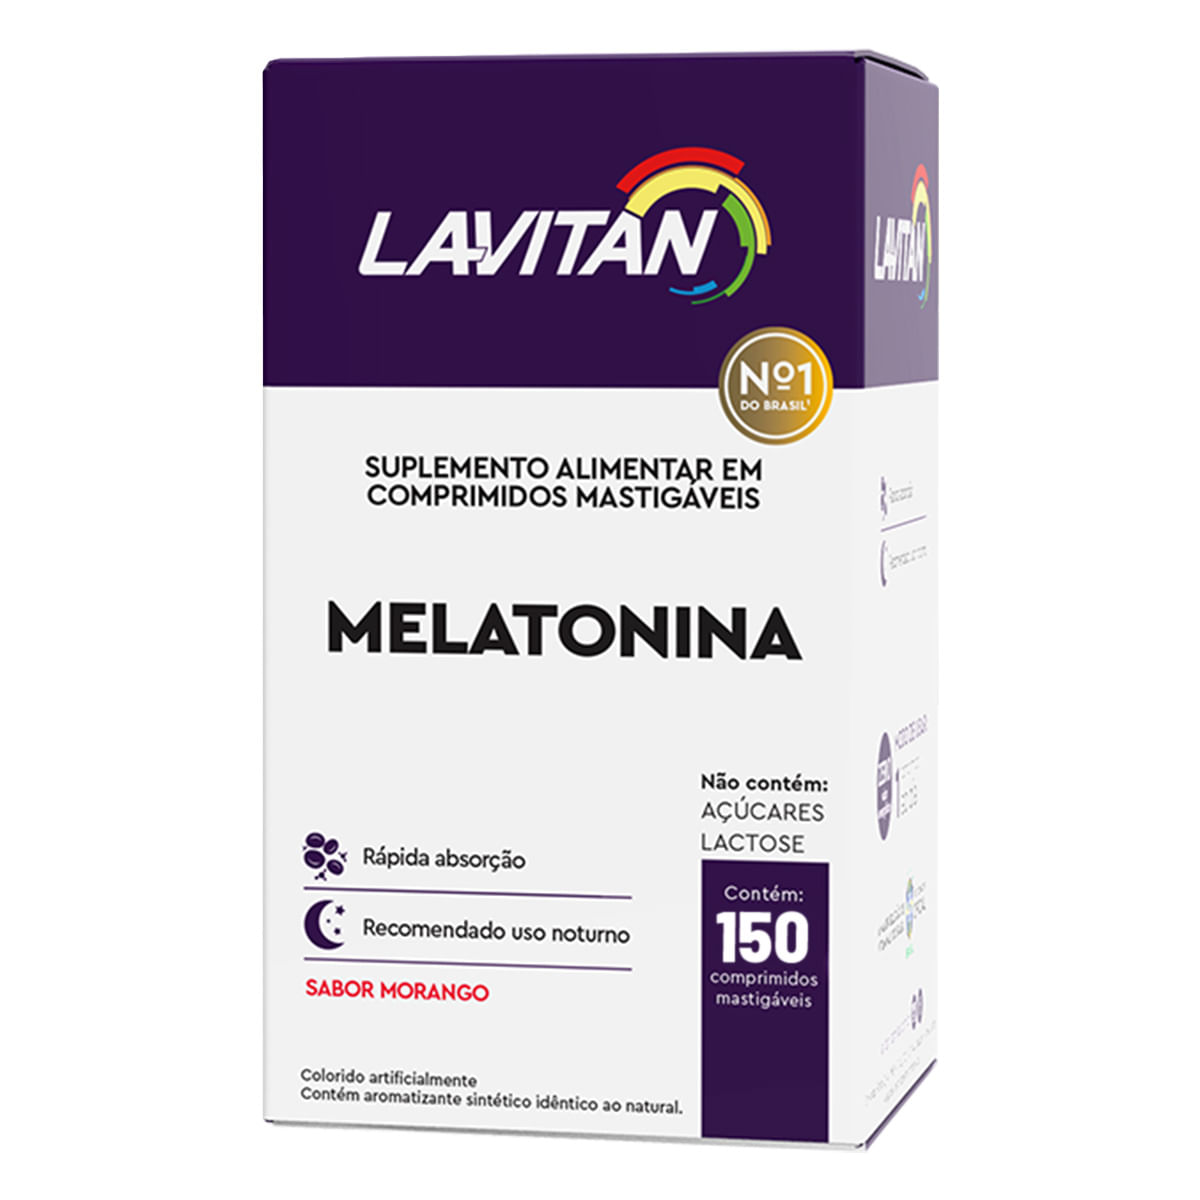 Lavitan Suplemento Alimentar Melatonina 150 Comprimidos Mastigáveis Sabor Morango CIMED